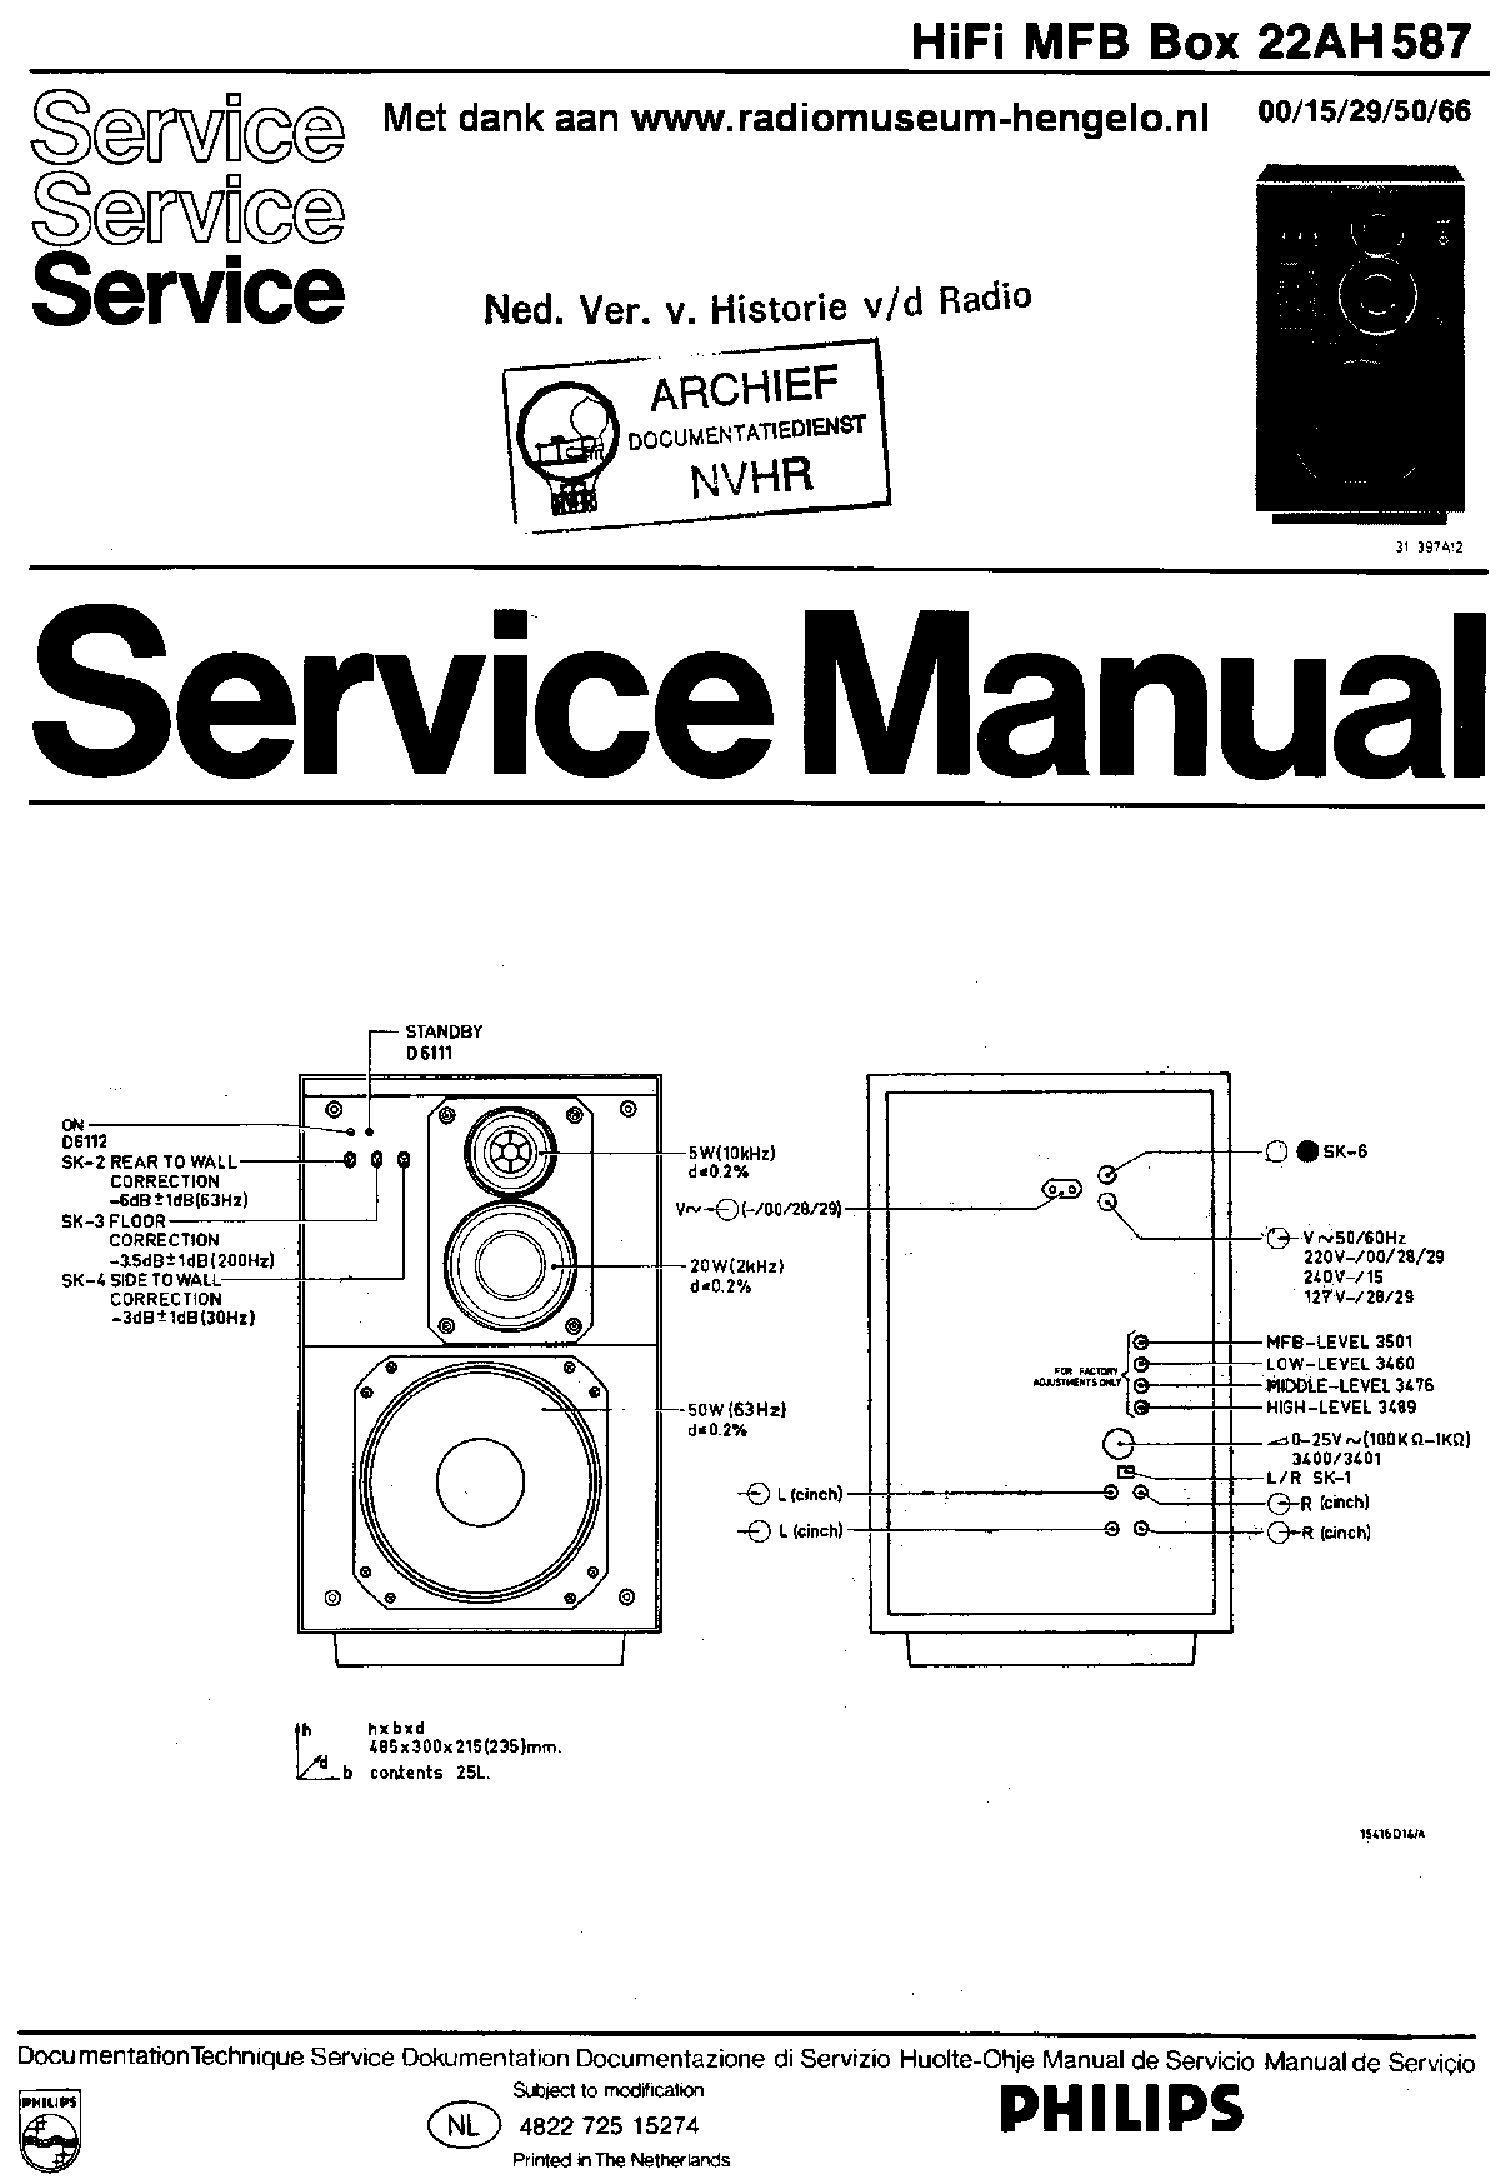 PHILIPS 22AH587-00-15-29-50-66 HIFI ACTIVE BOX SM service manual (1st page)